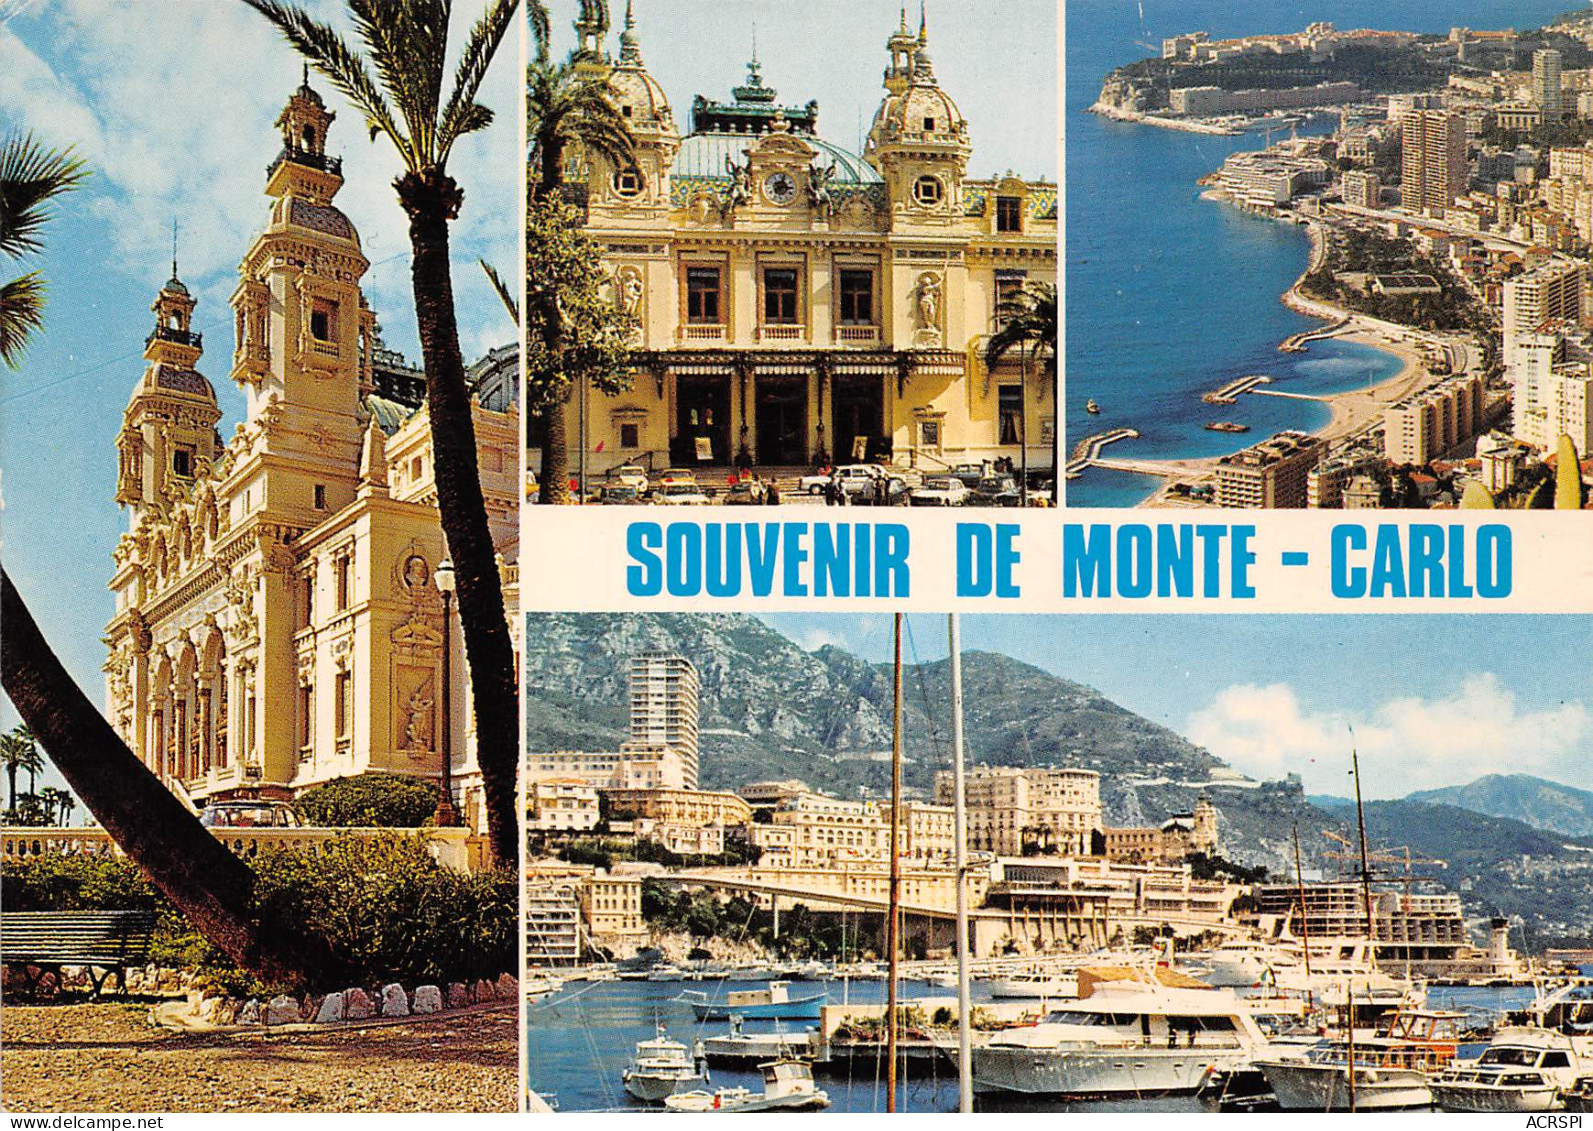 MONACO  Monte Carlo Divers Vues Souvenir   N° 162 \MK3006 - Mehransichten, Panoramakarten